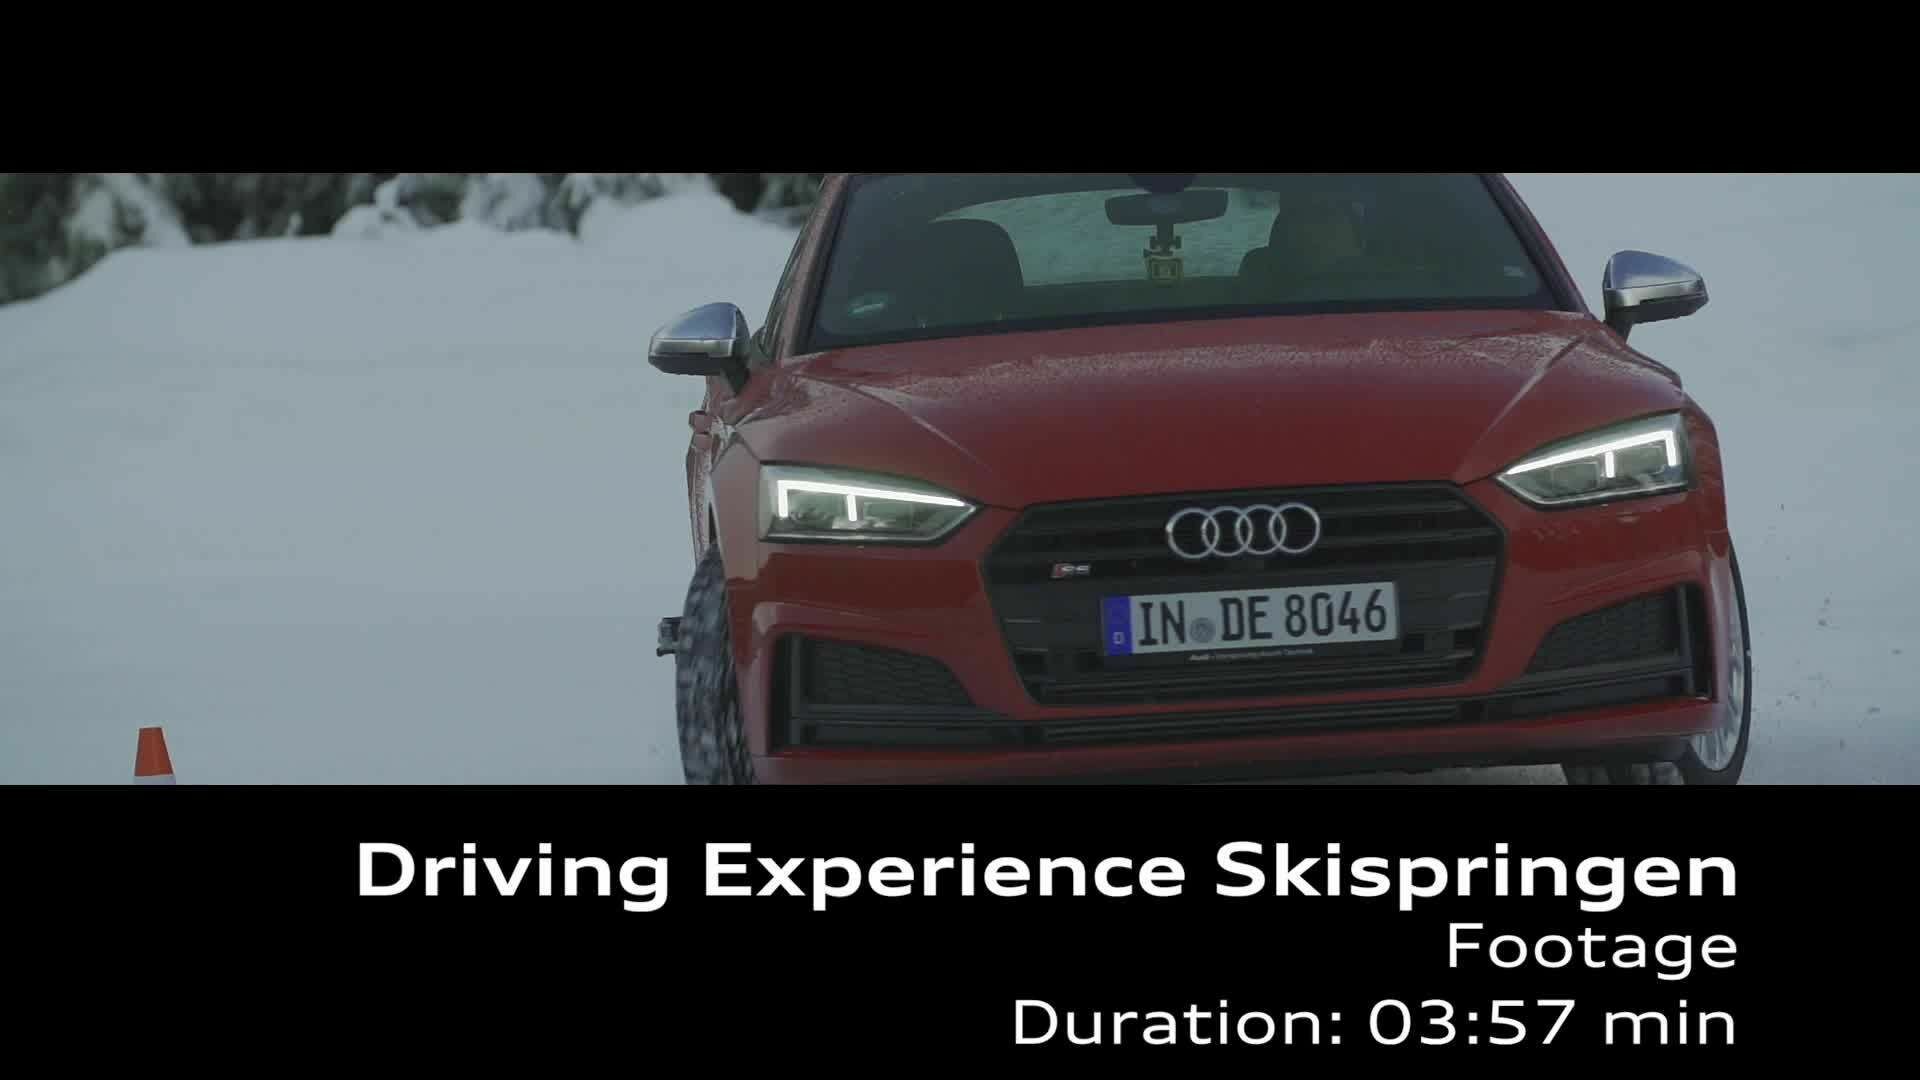 Ski athletes at Audi driving experience Footage